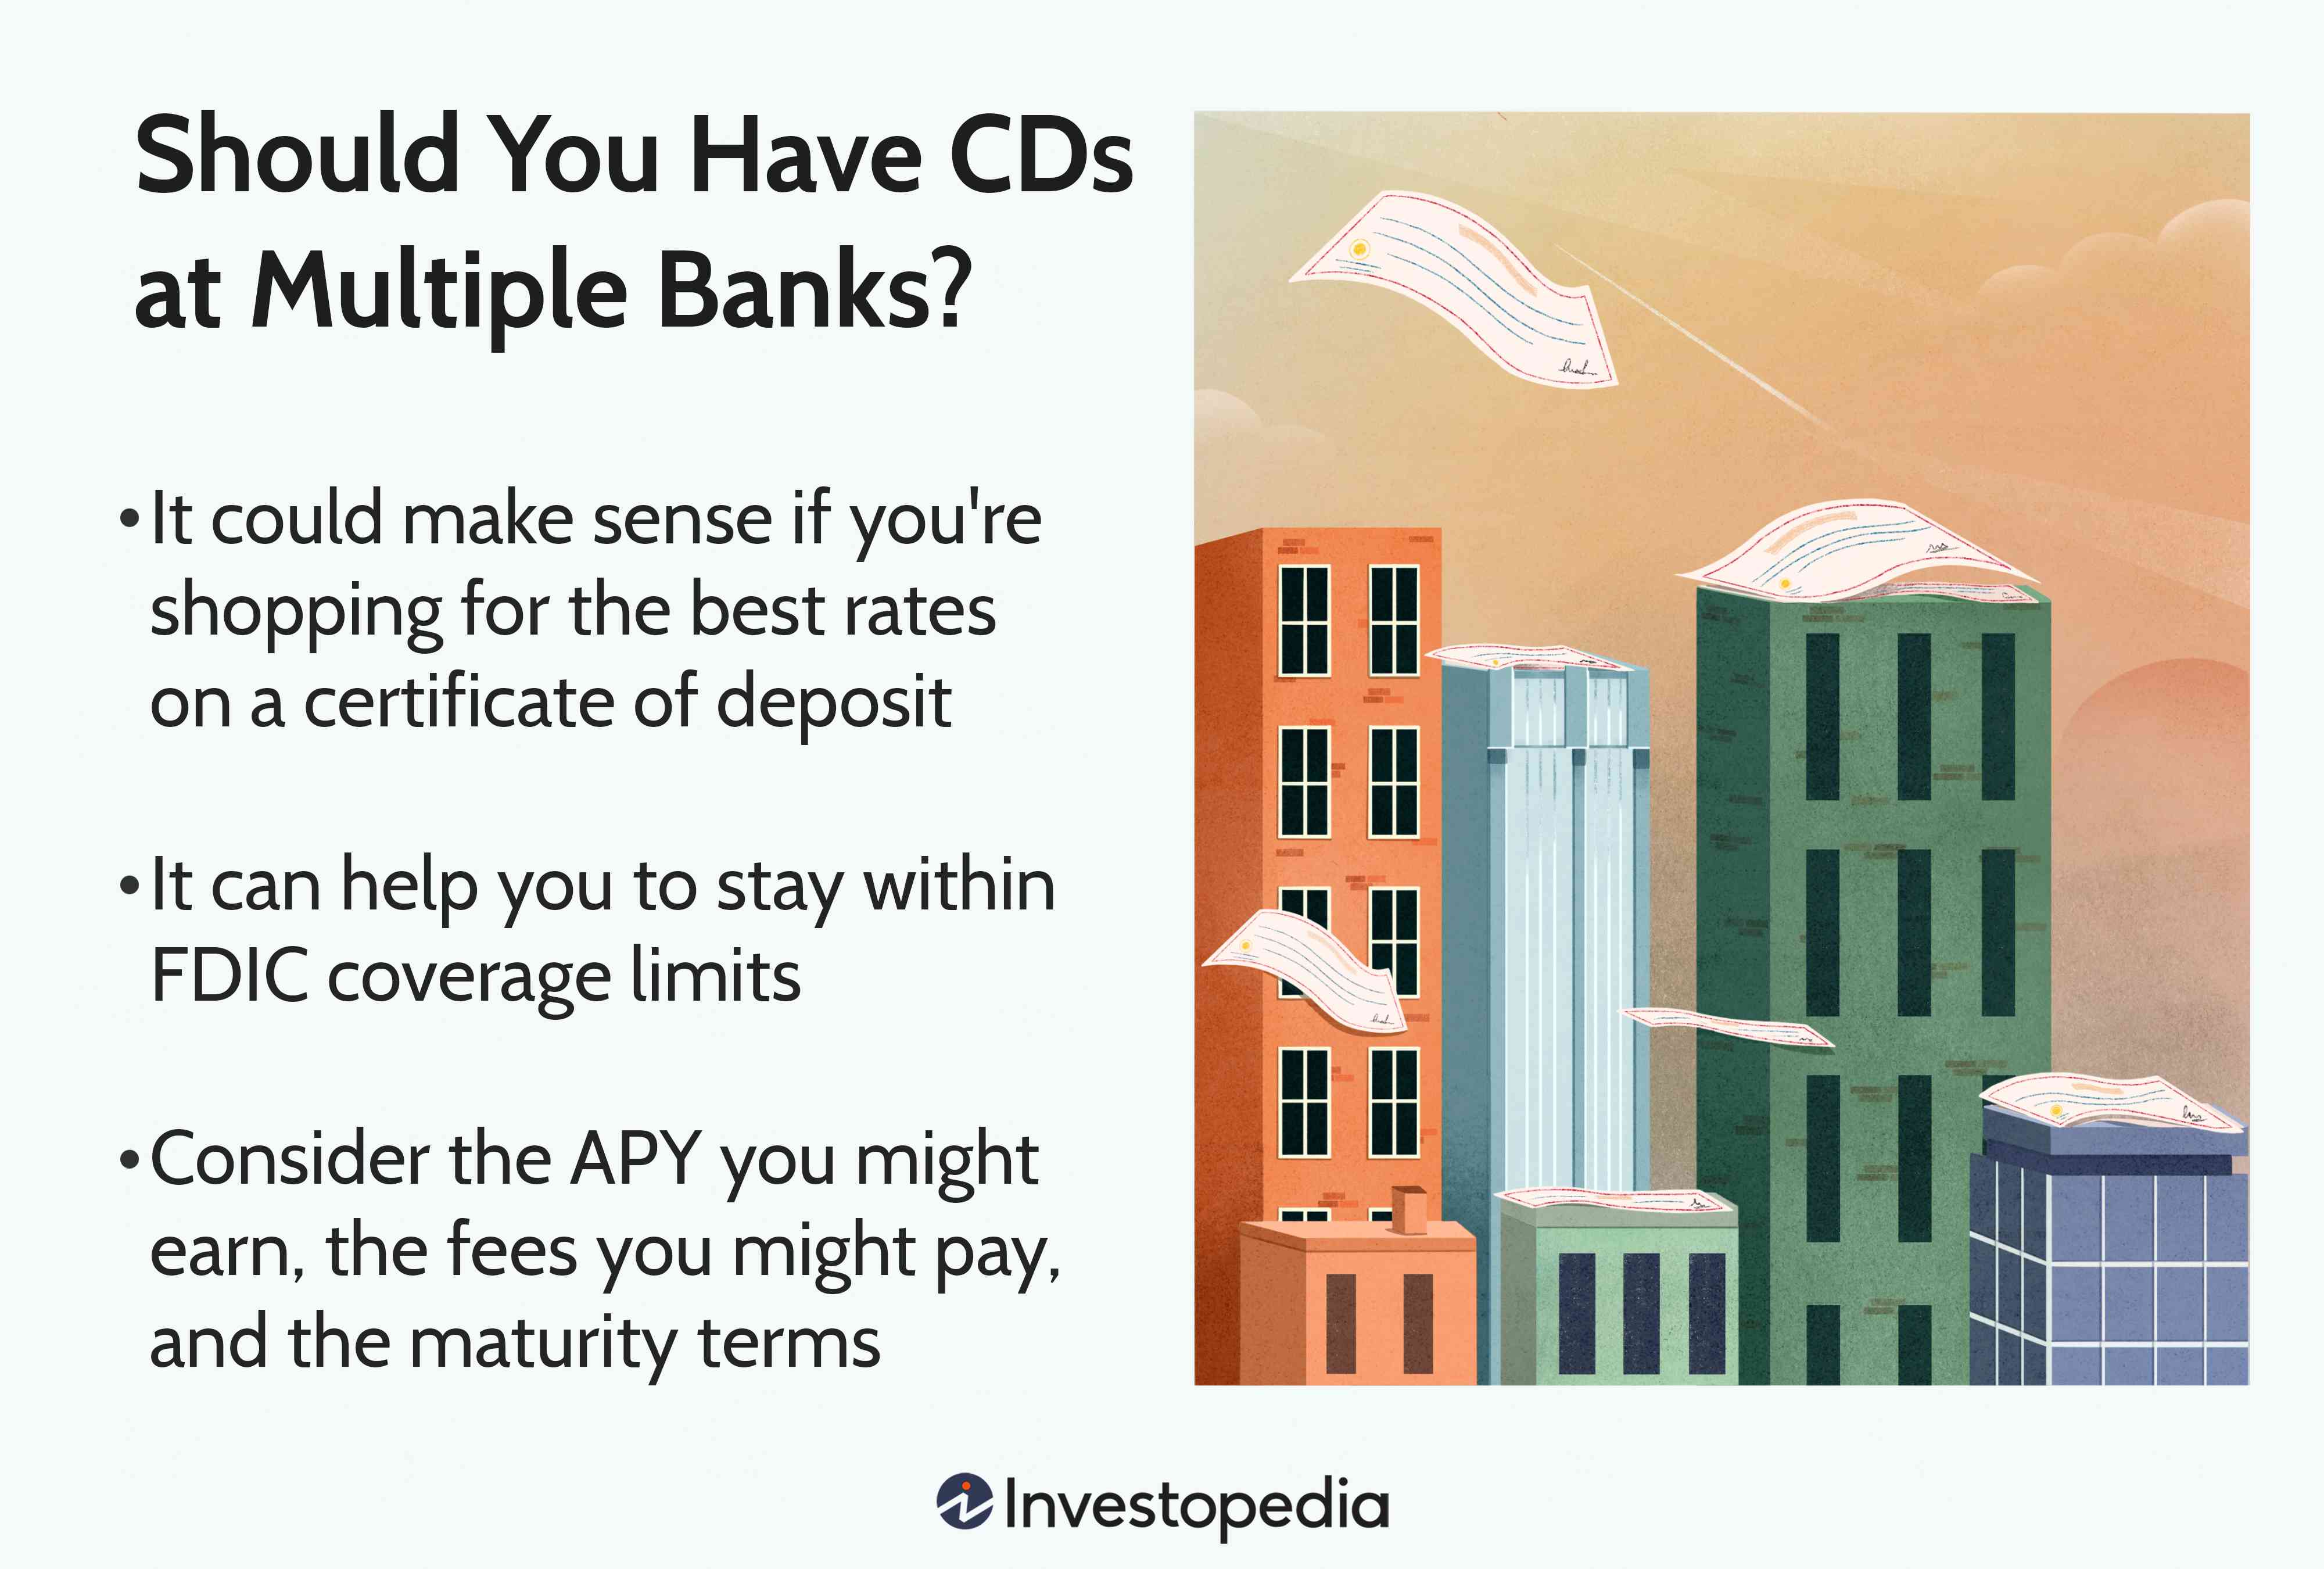 Should You Have CDs at Multiple Banks?